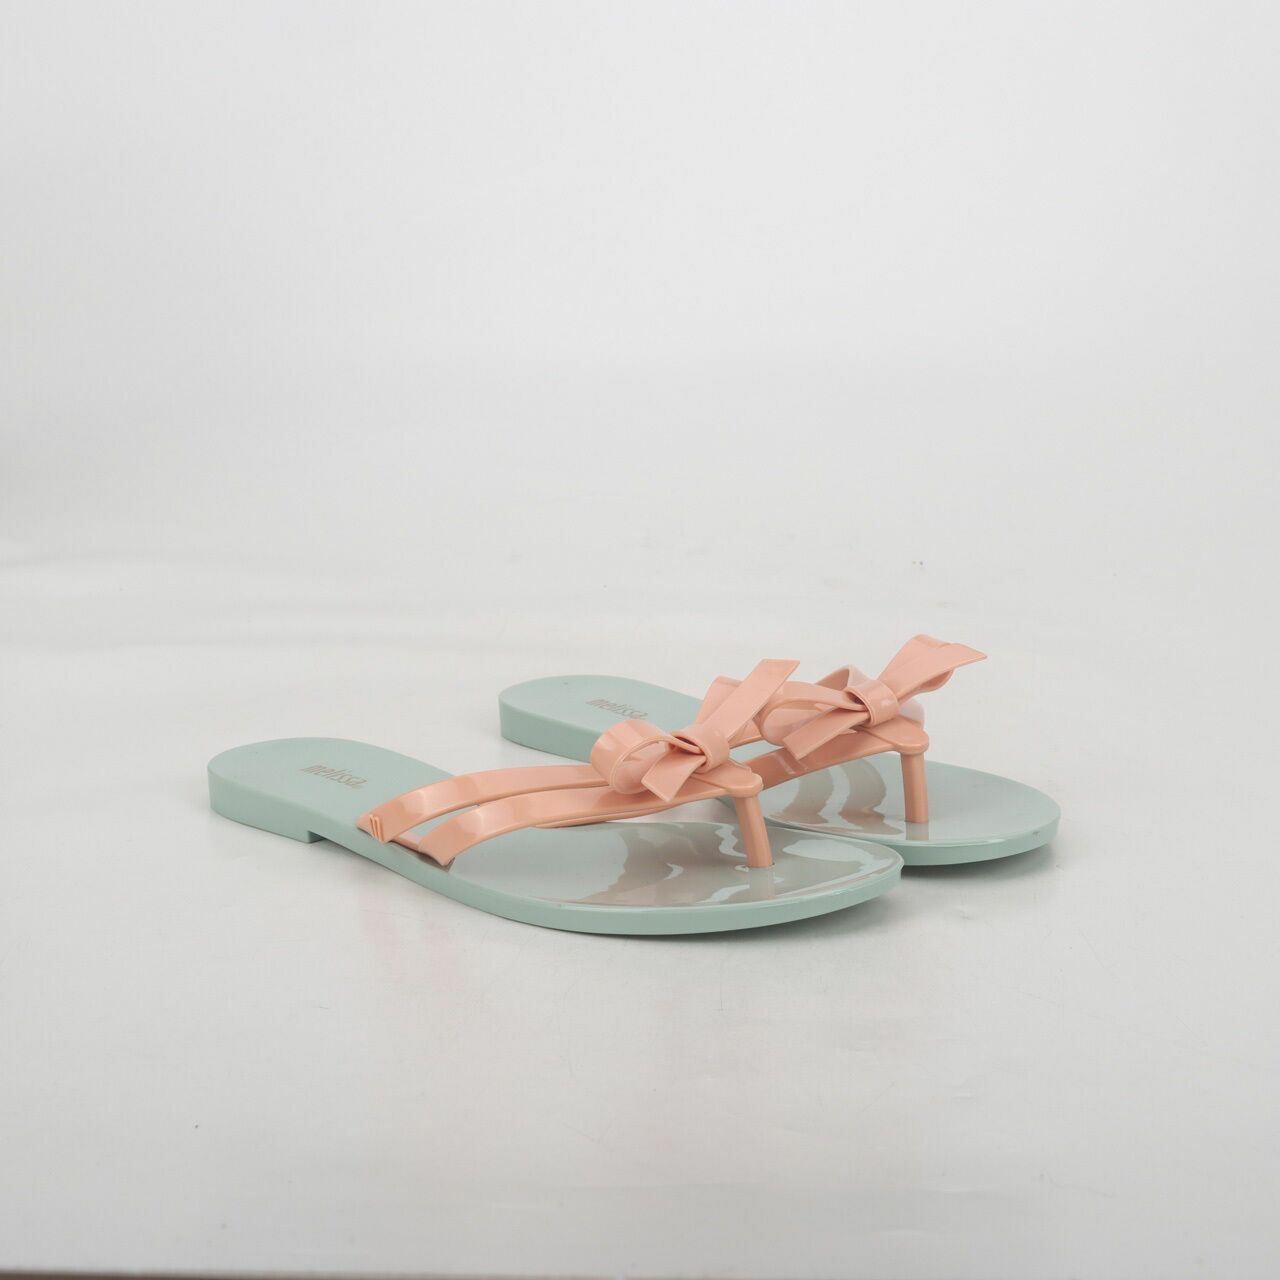 Melissa Mint & Peach Sandals